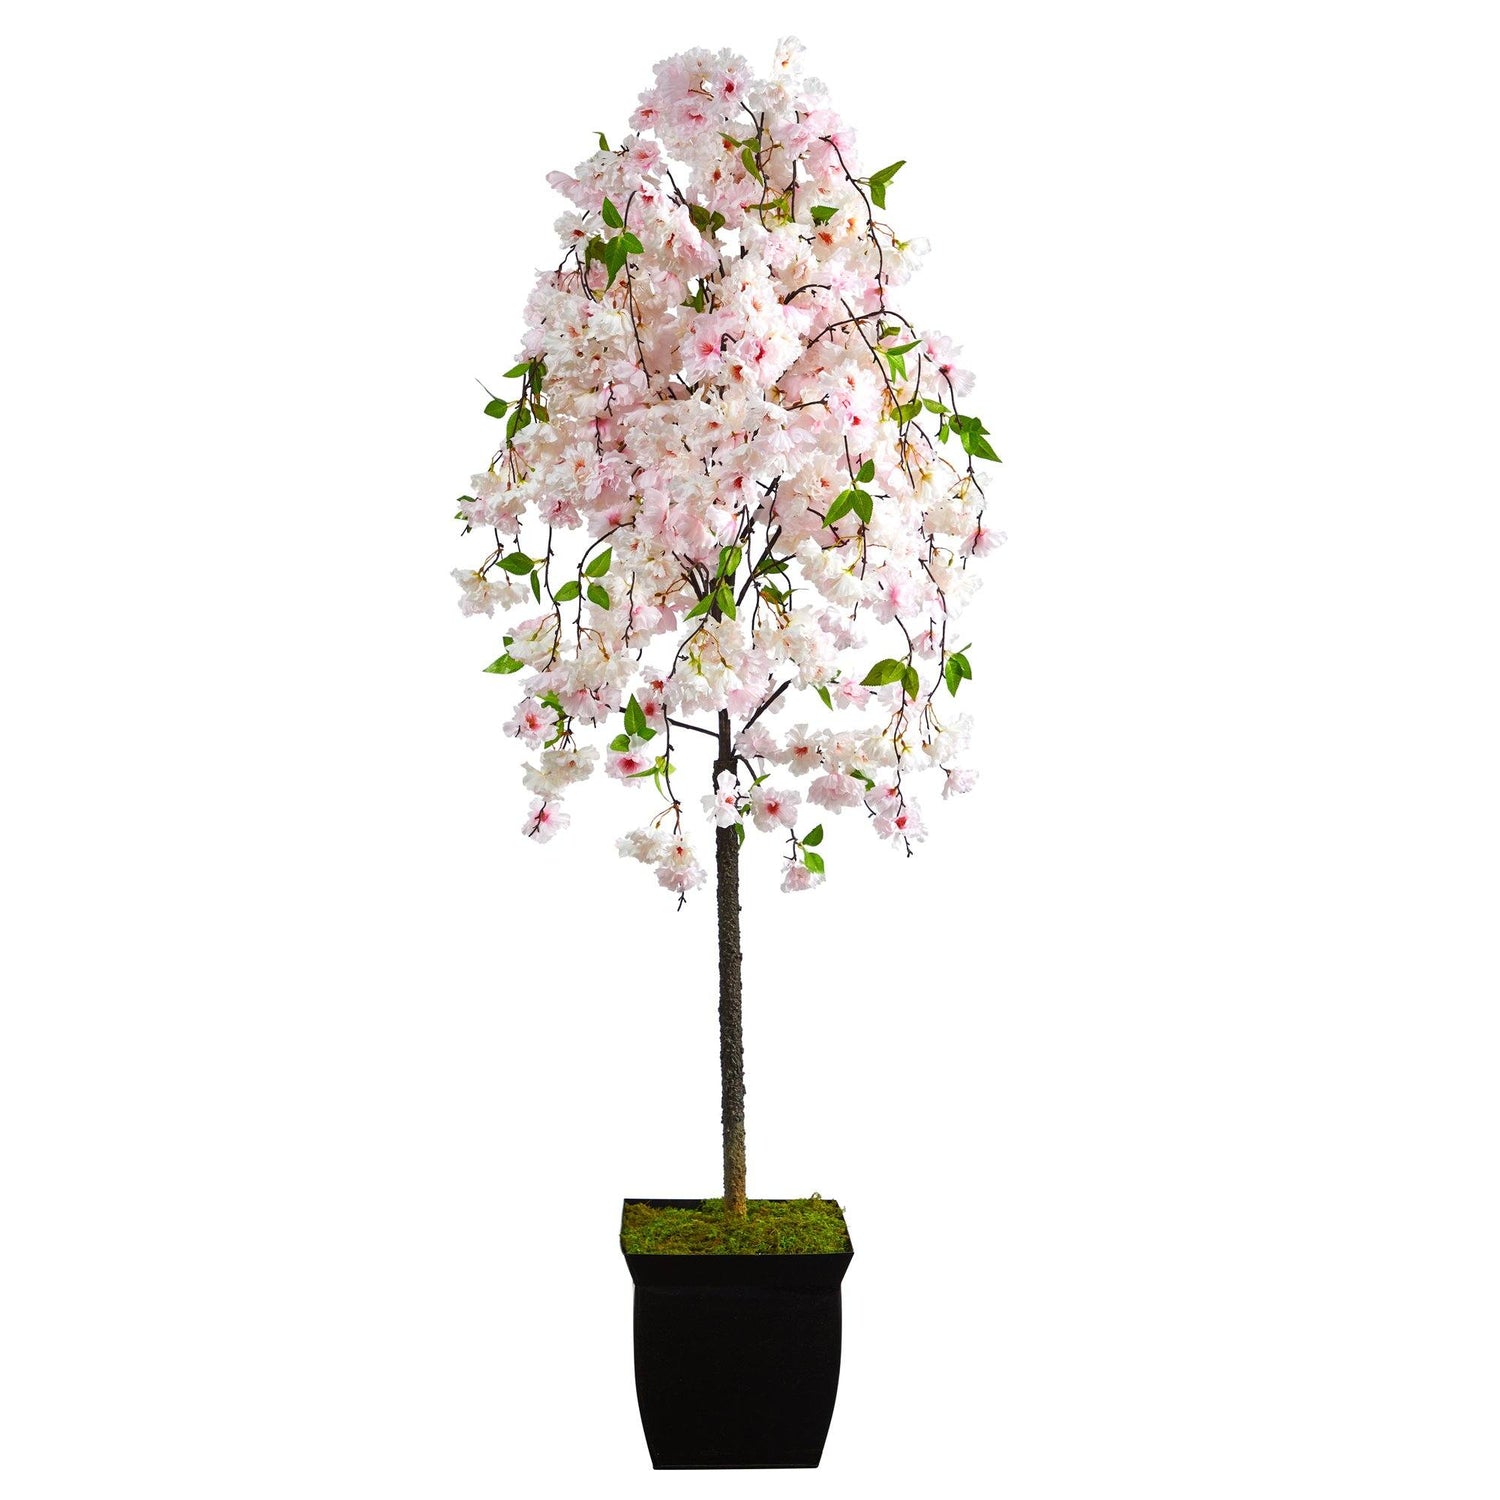 70” Cherry Blossom Artificial Tree in Black Metal Planter